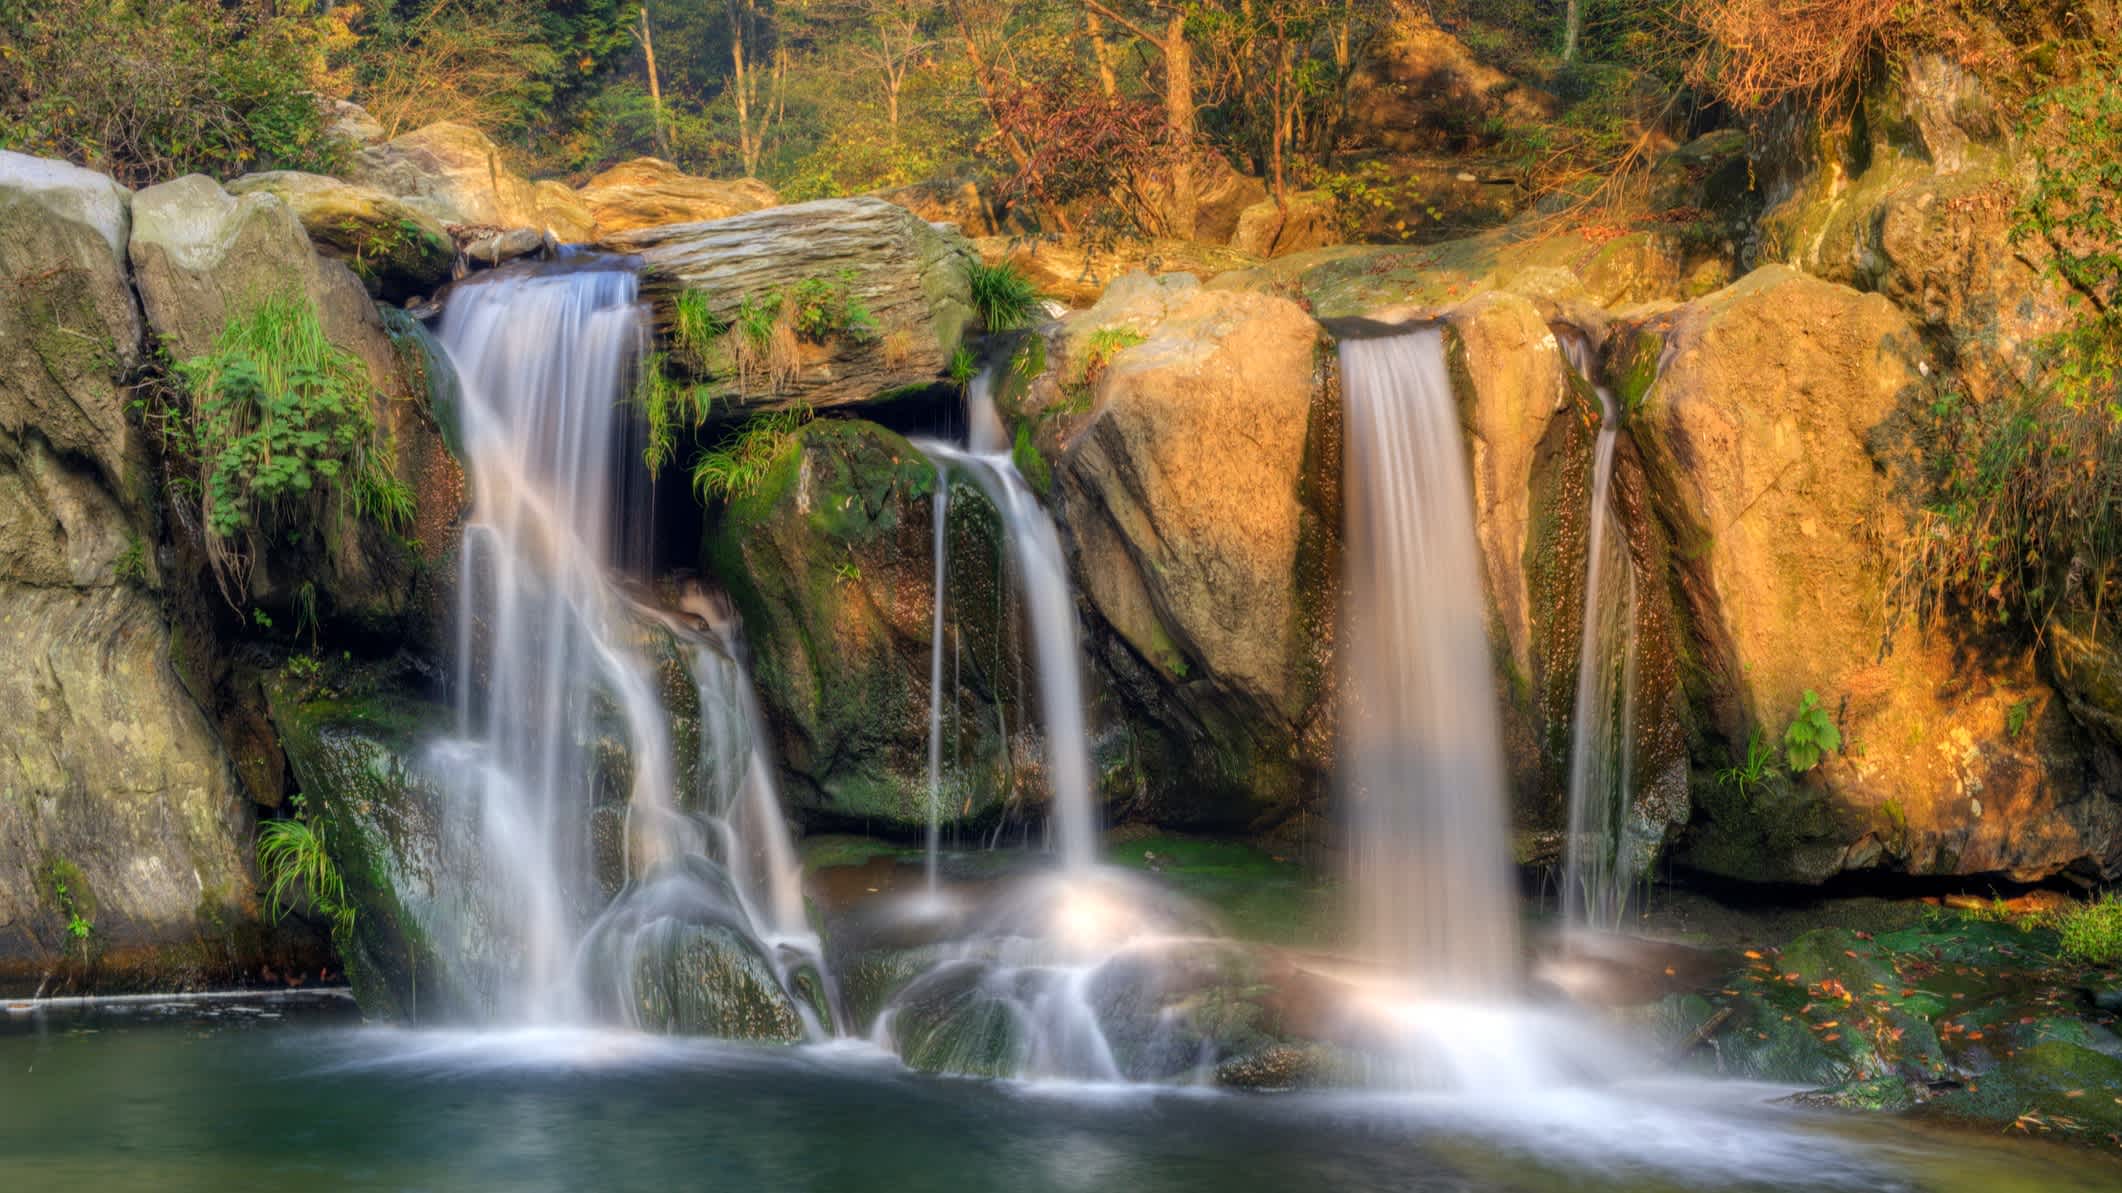 Waterfall in autumn, Mt. Lu Shan, China

